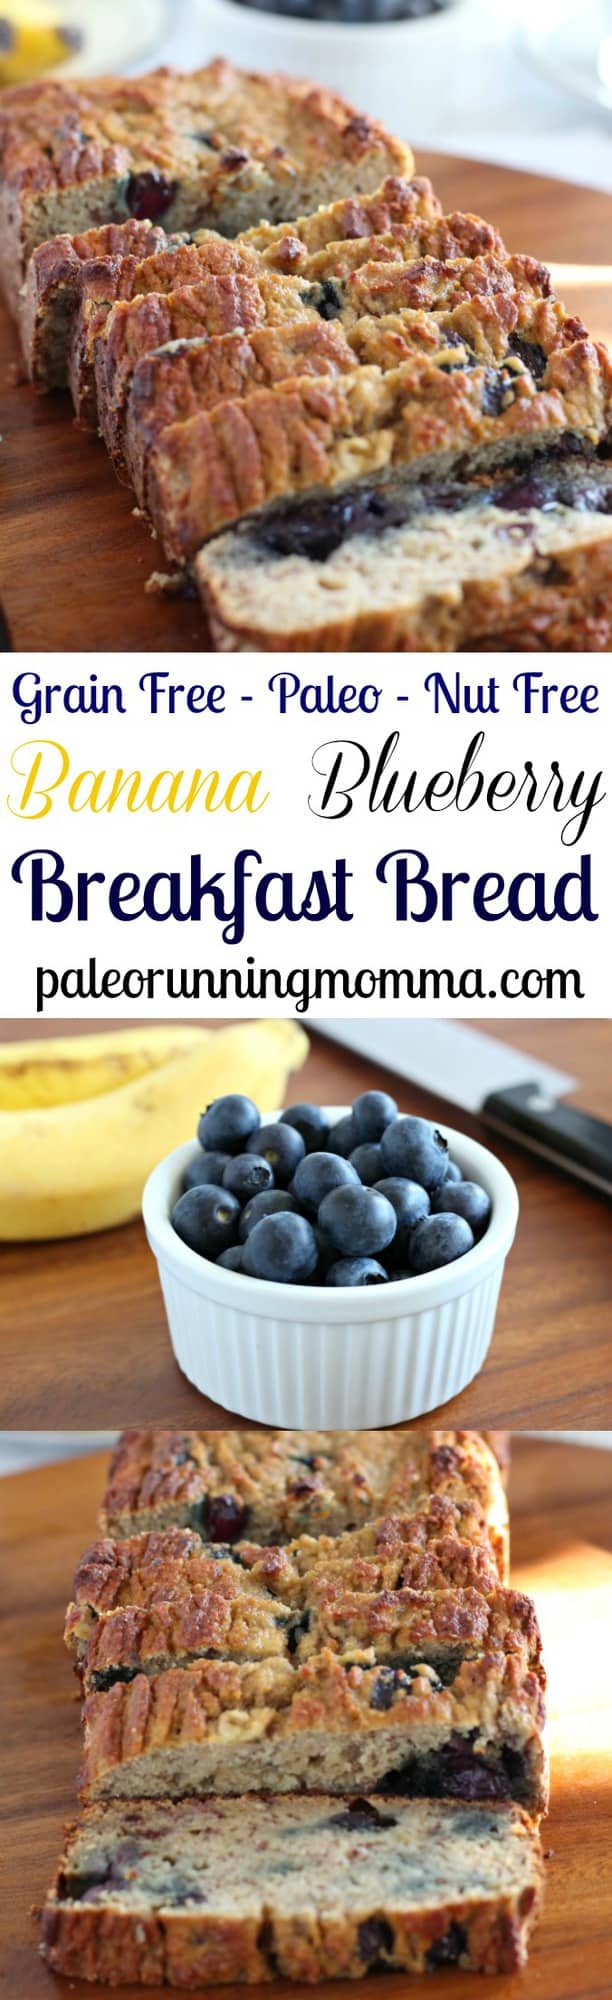 Banana Blueberry Breakfast Bread - #paleo #grainfree #nutfree